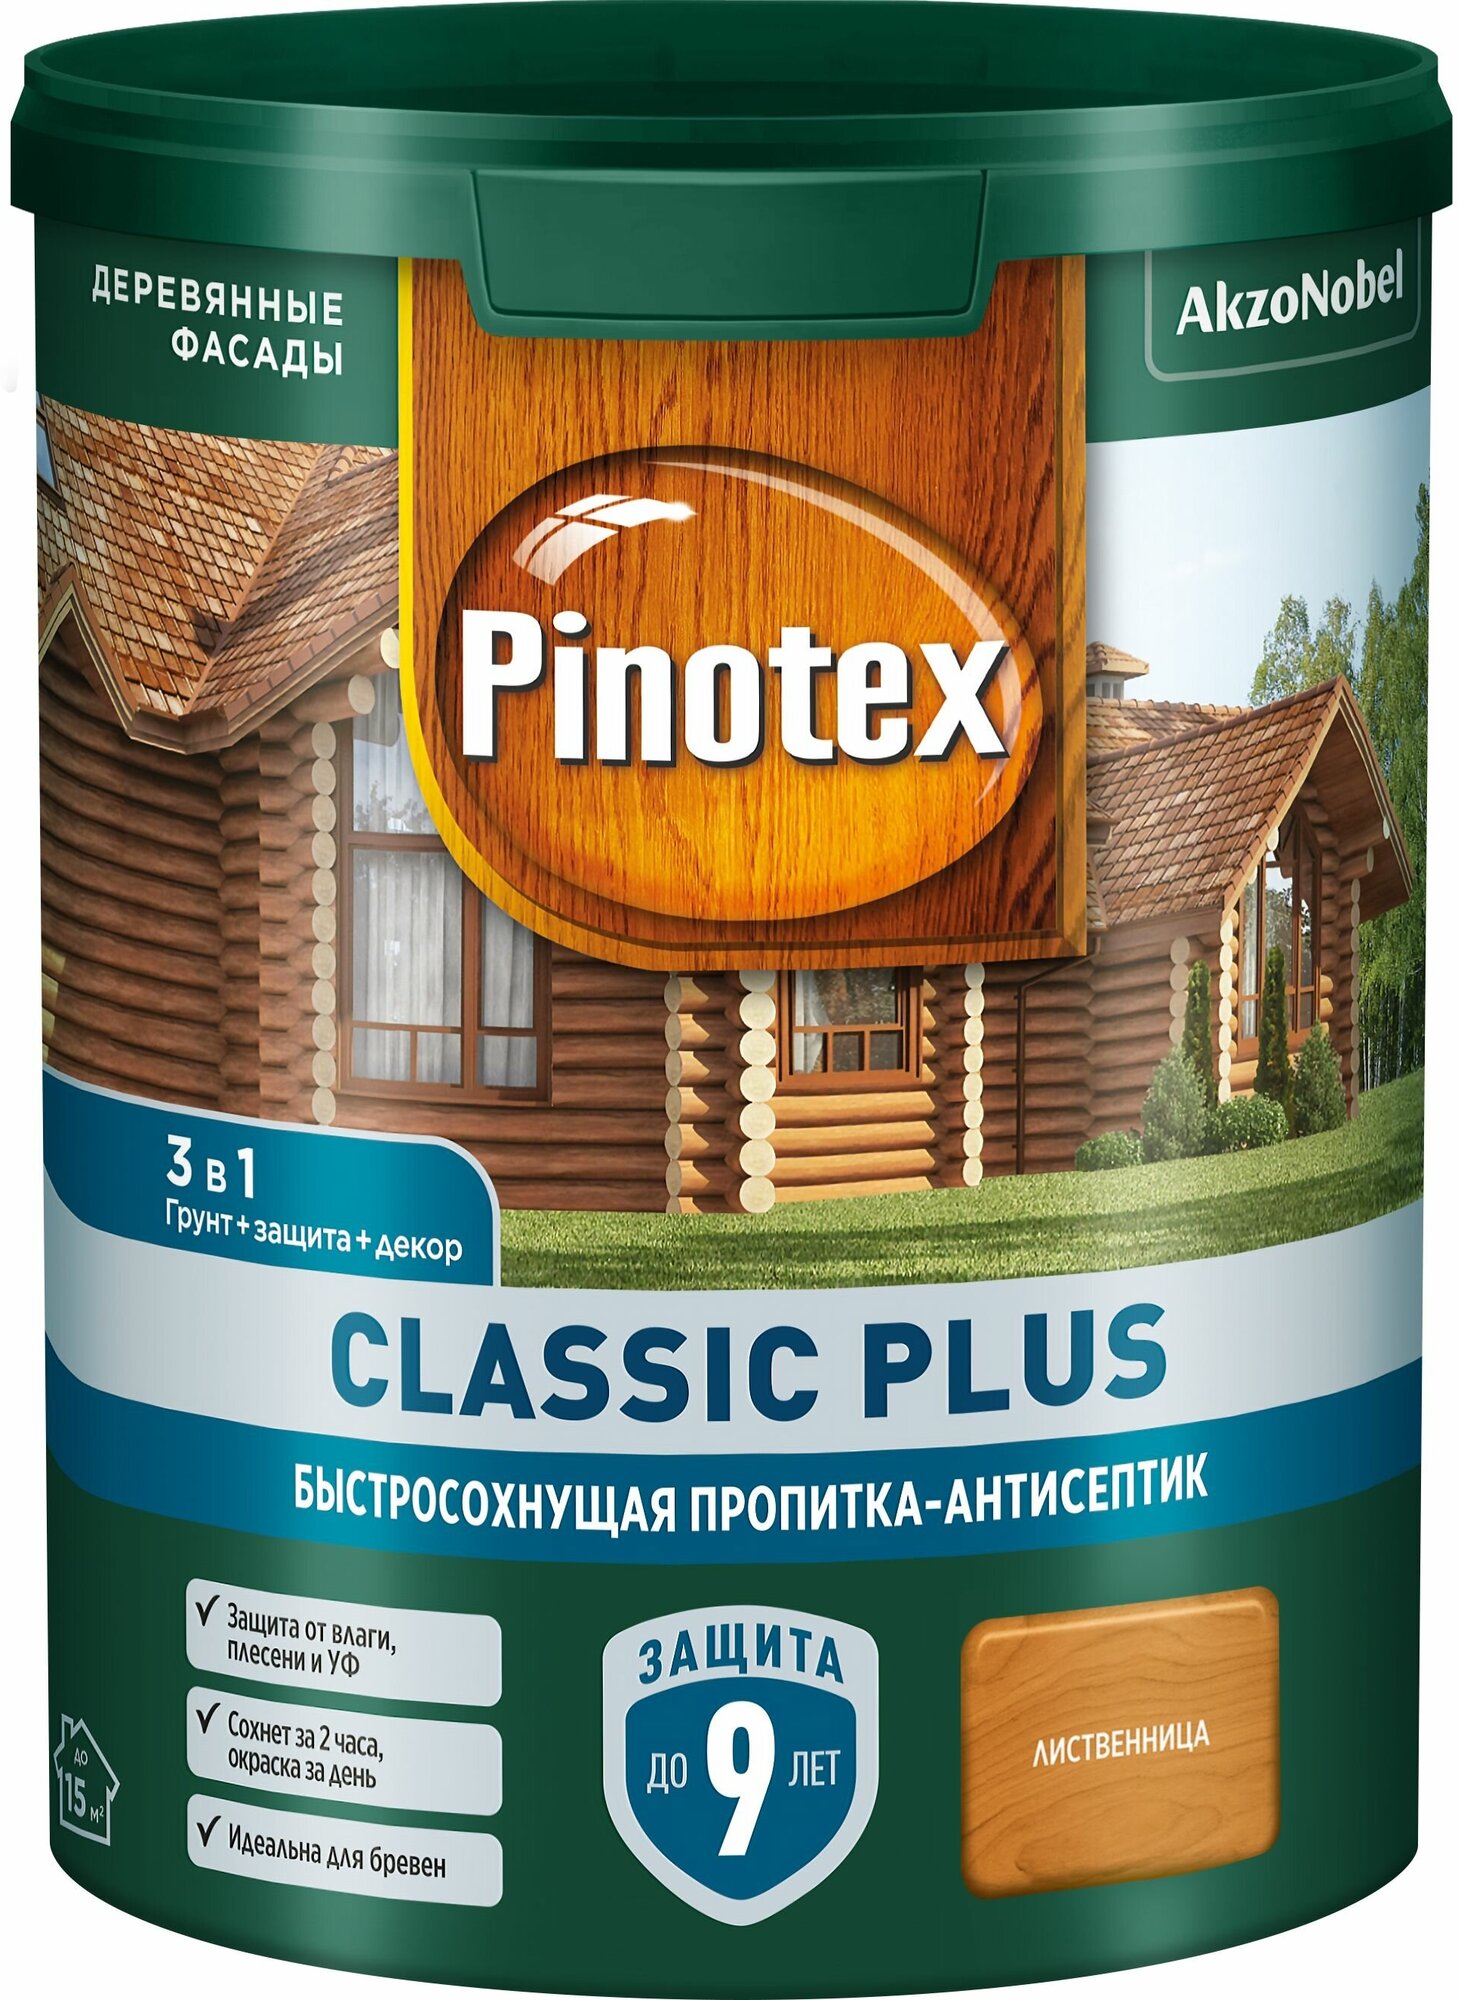 PINOTEX CLASSIC PLUS пропитка-антисептик быстросохнущая 3 в 1, лиственница (0,9л)